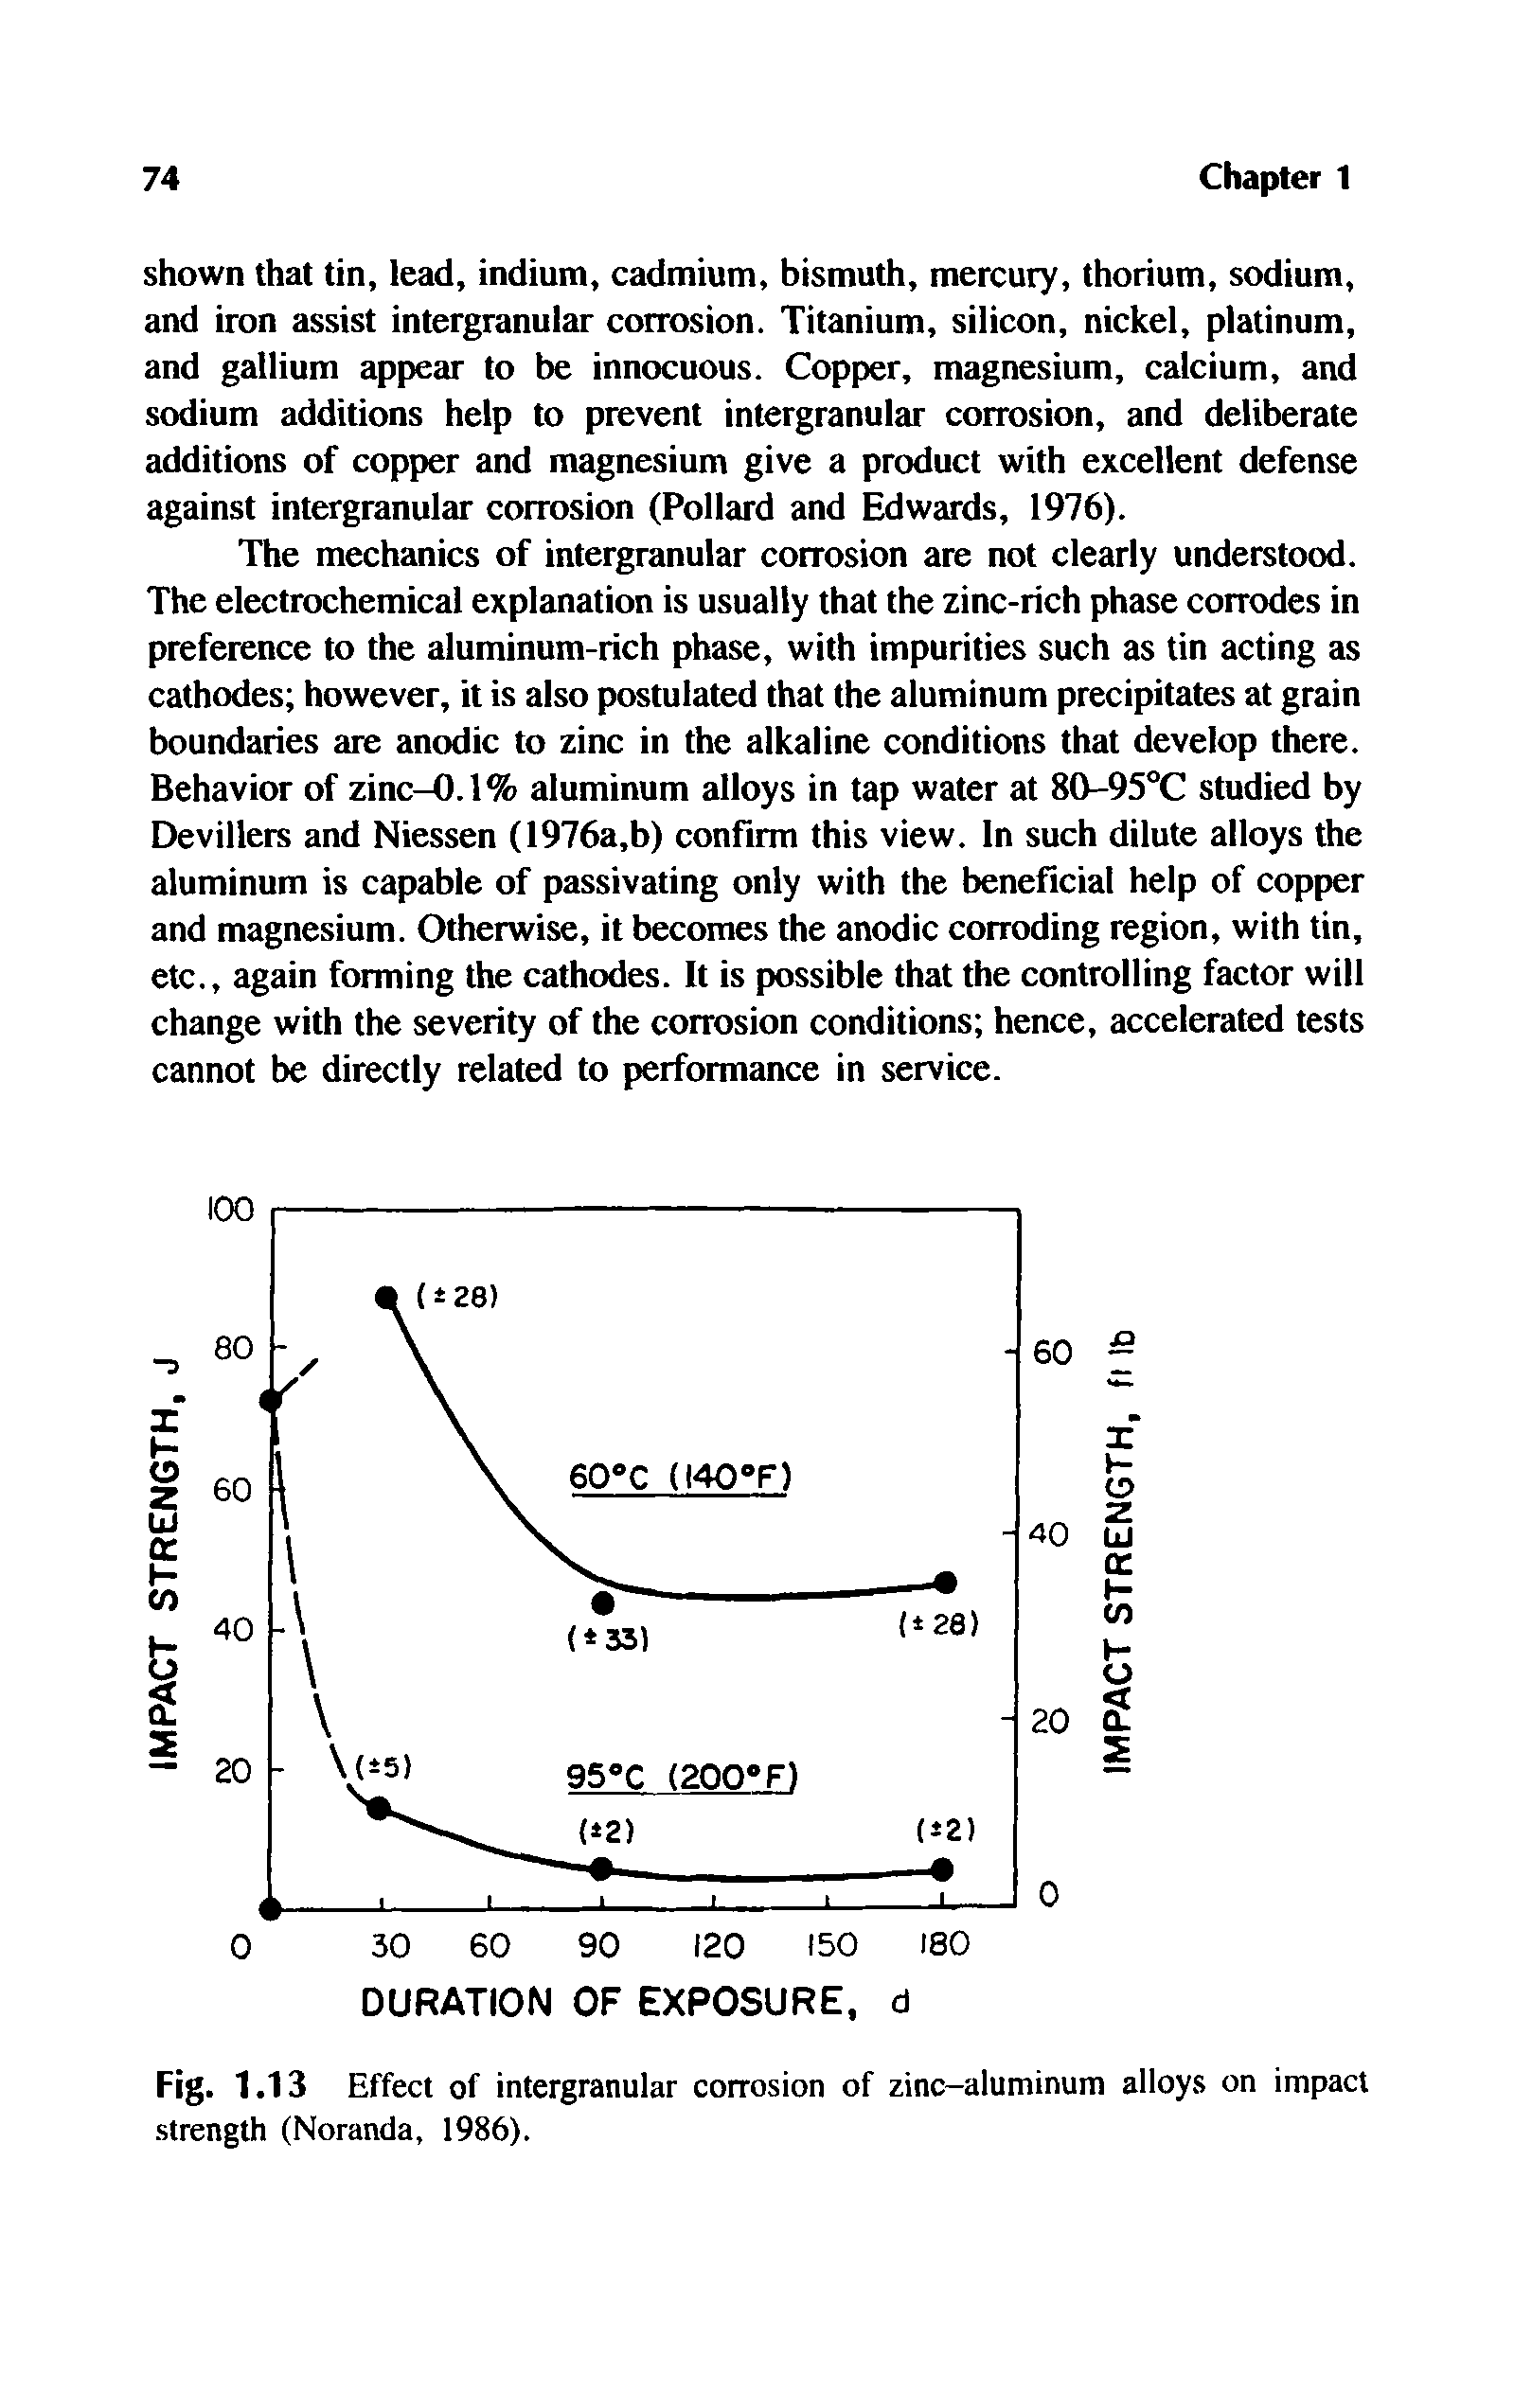 Fig. 1.13 Effect of intergranular corrosion of zinc-aluminum alloys on impact strength (Noranda, 1986).